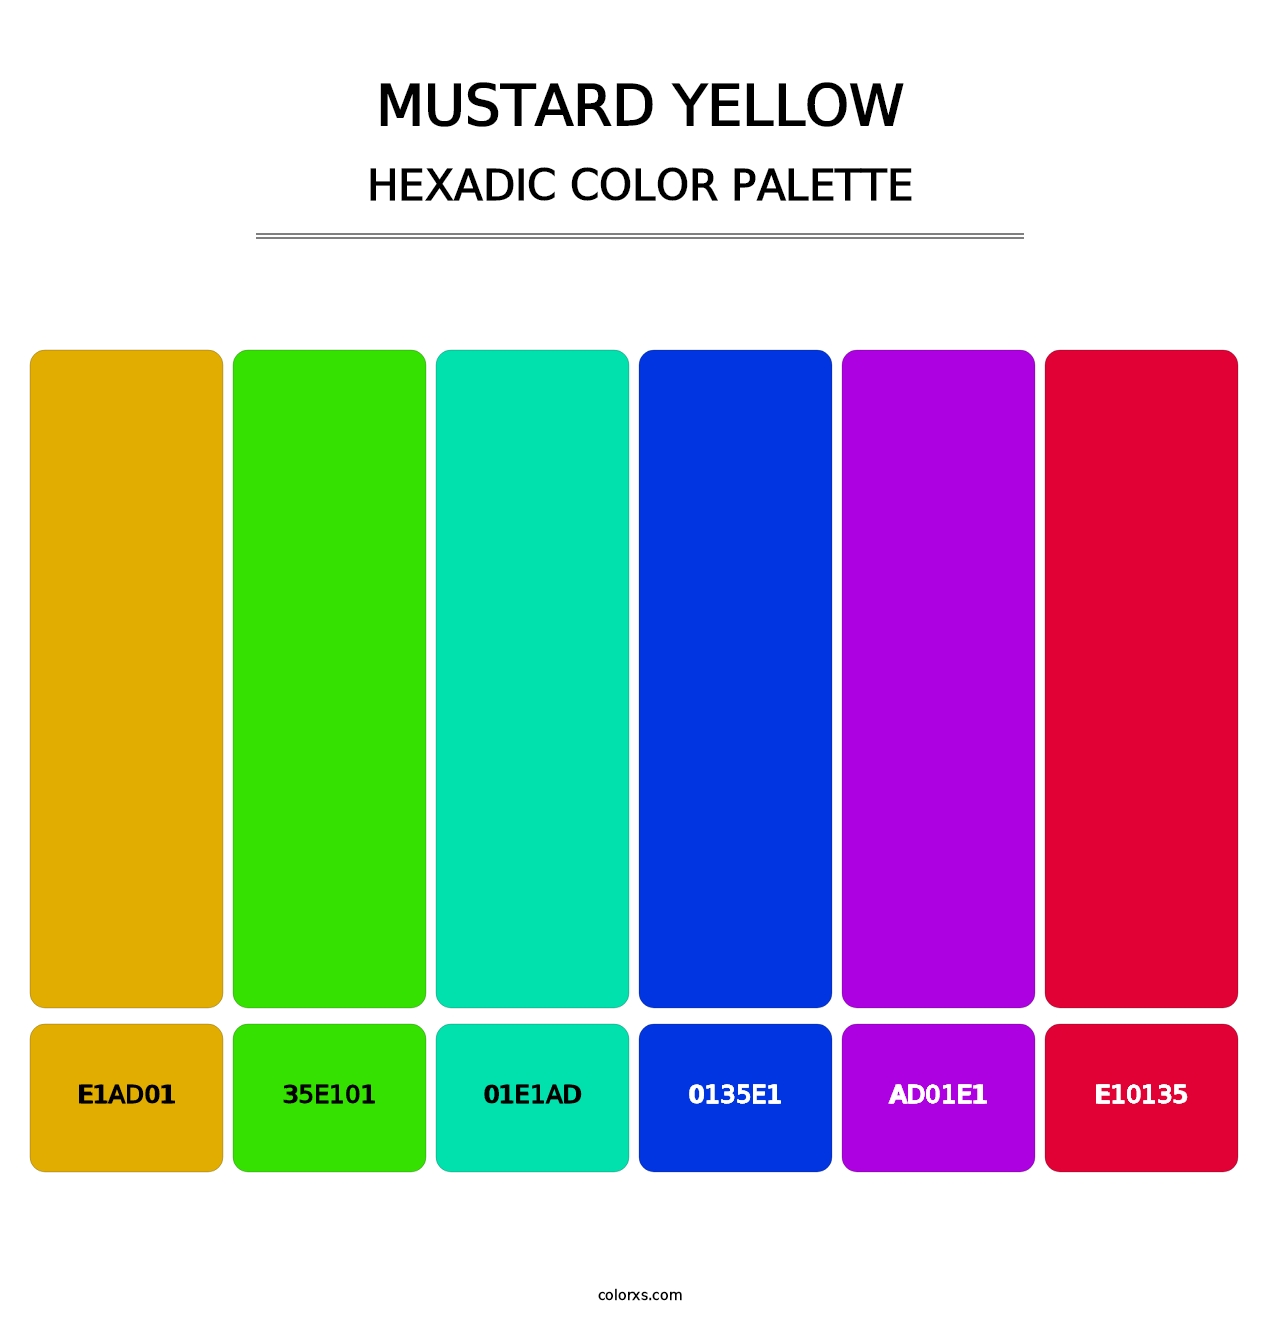 Mustard Yellow - Hexadic Color Palette